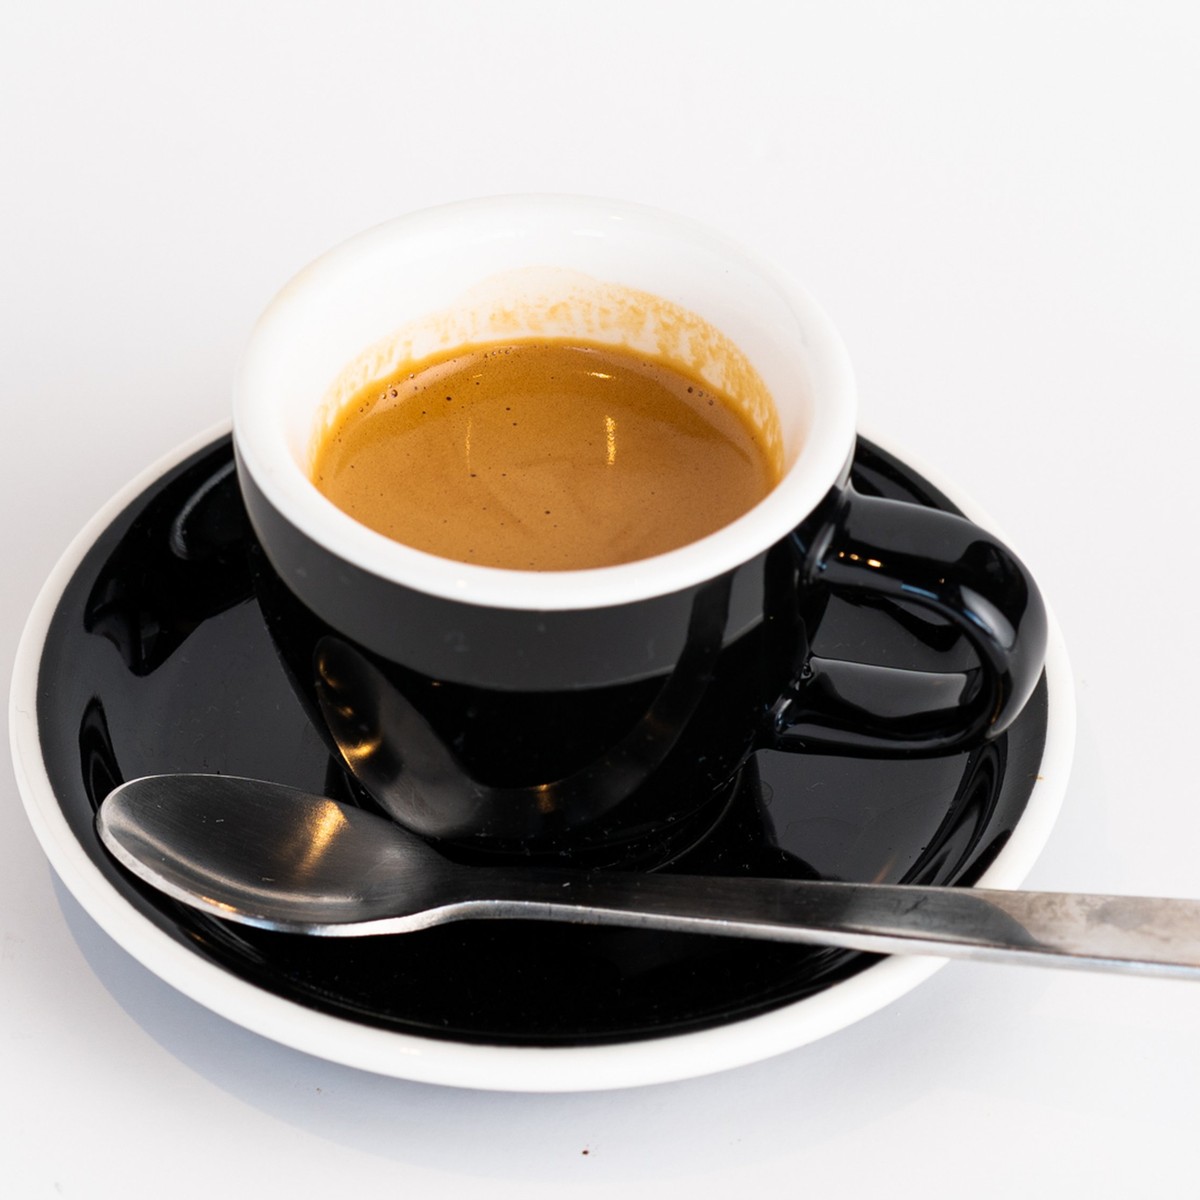 Yama Glass 2 Cup Coffee/Tea French Press (8oz)